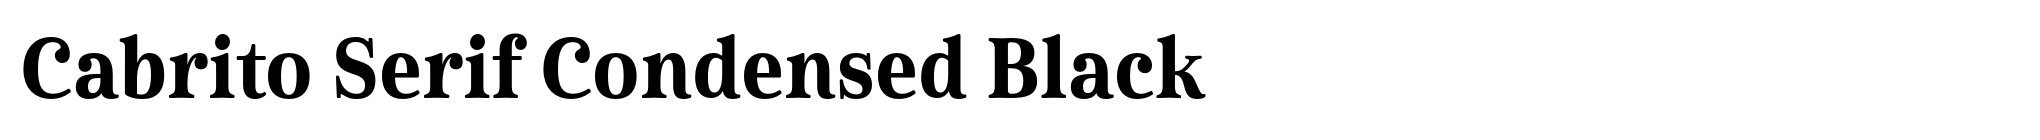 Cabrito Serif Condensed Black image